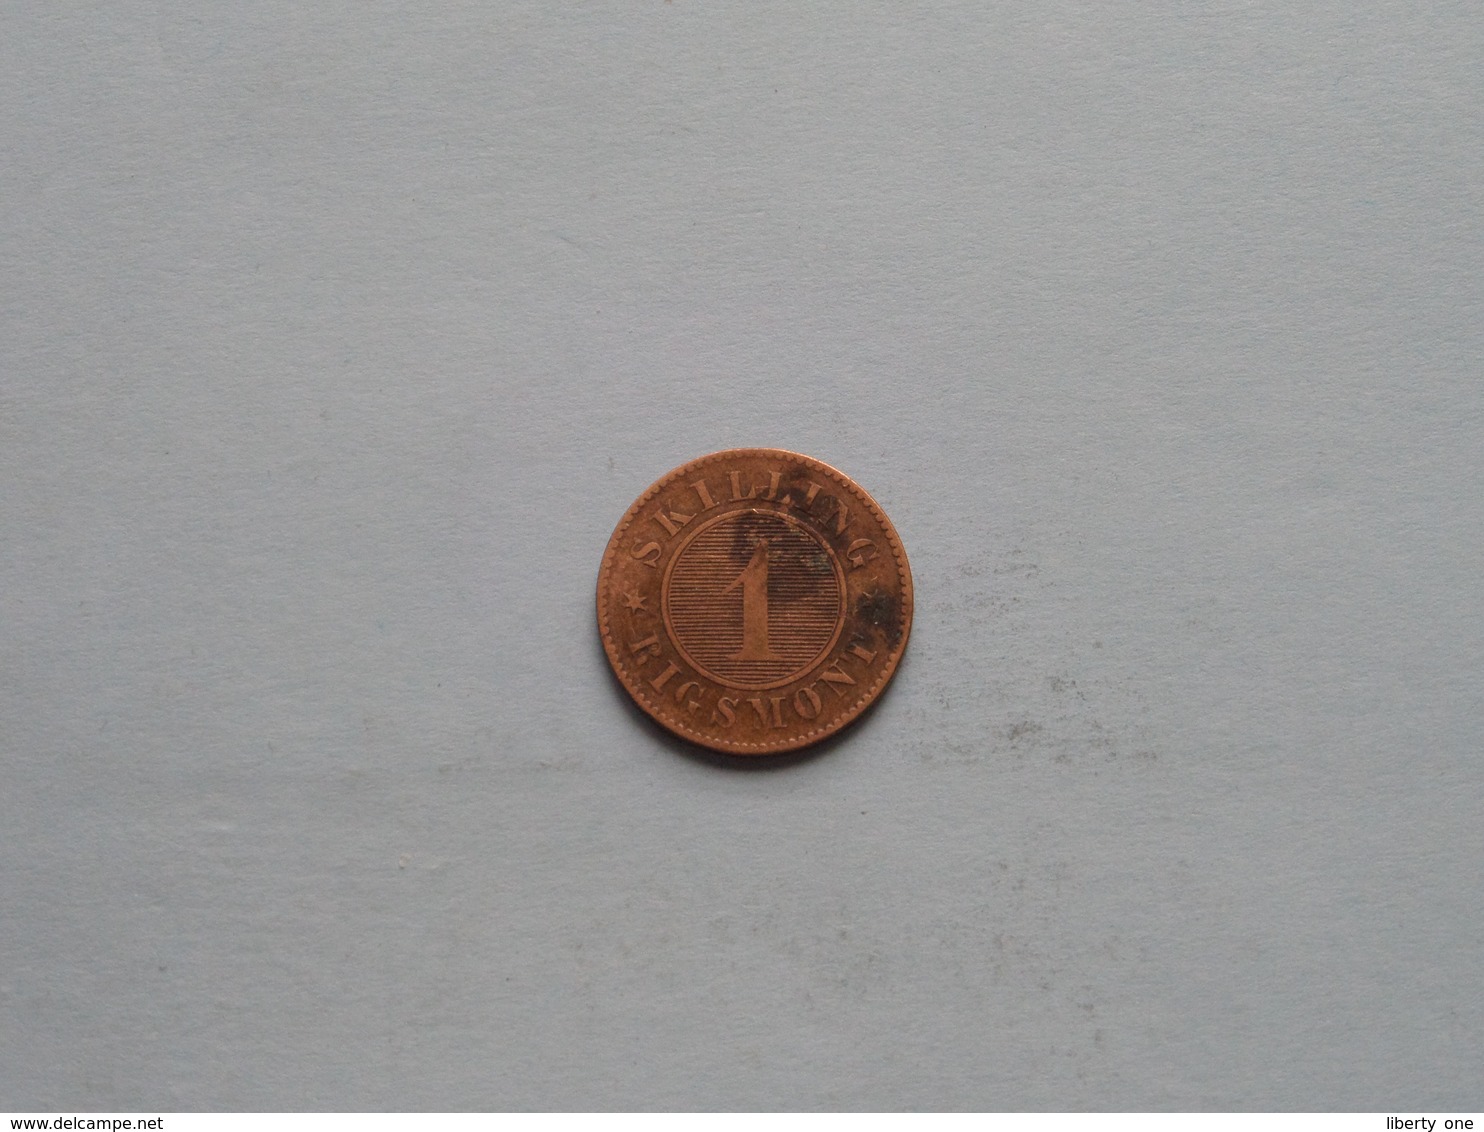 1860 Rigsmont - 1 Skilling / KM 763 ( Uncleaned Coin - For Grade, Please See Photo ) !! - Denmark